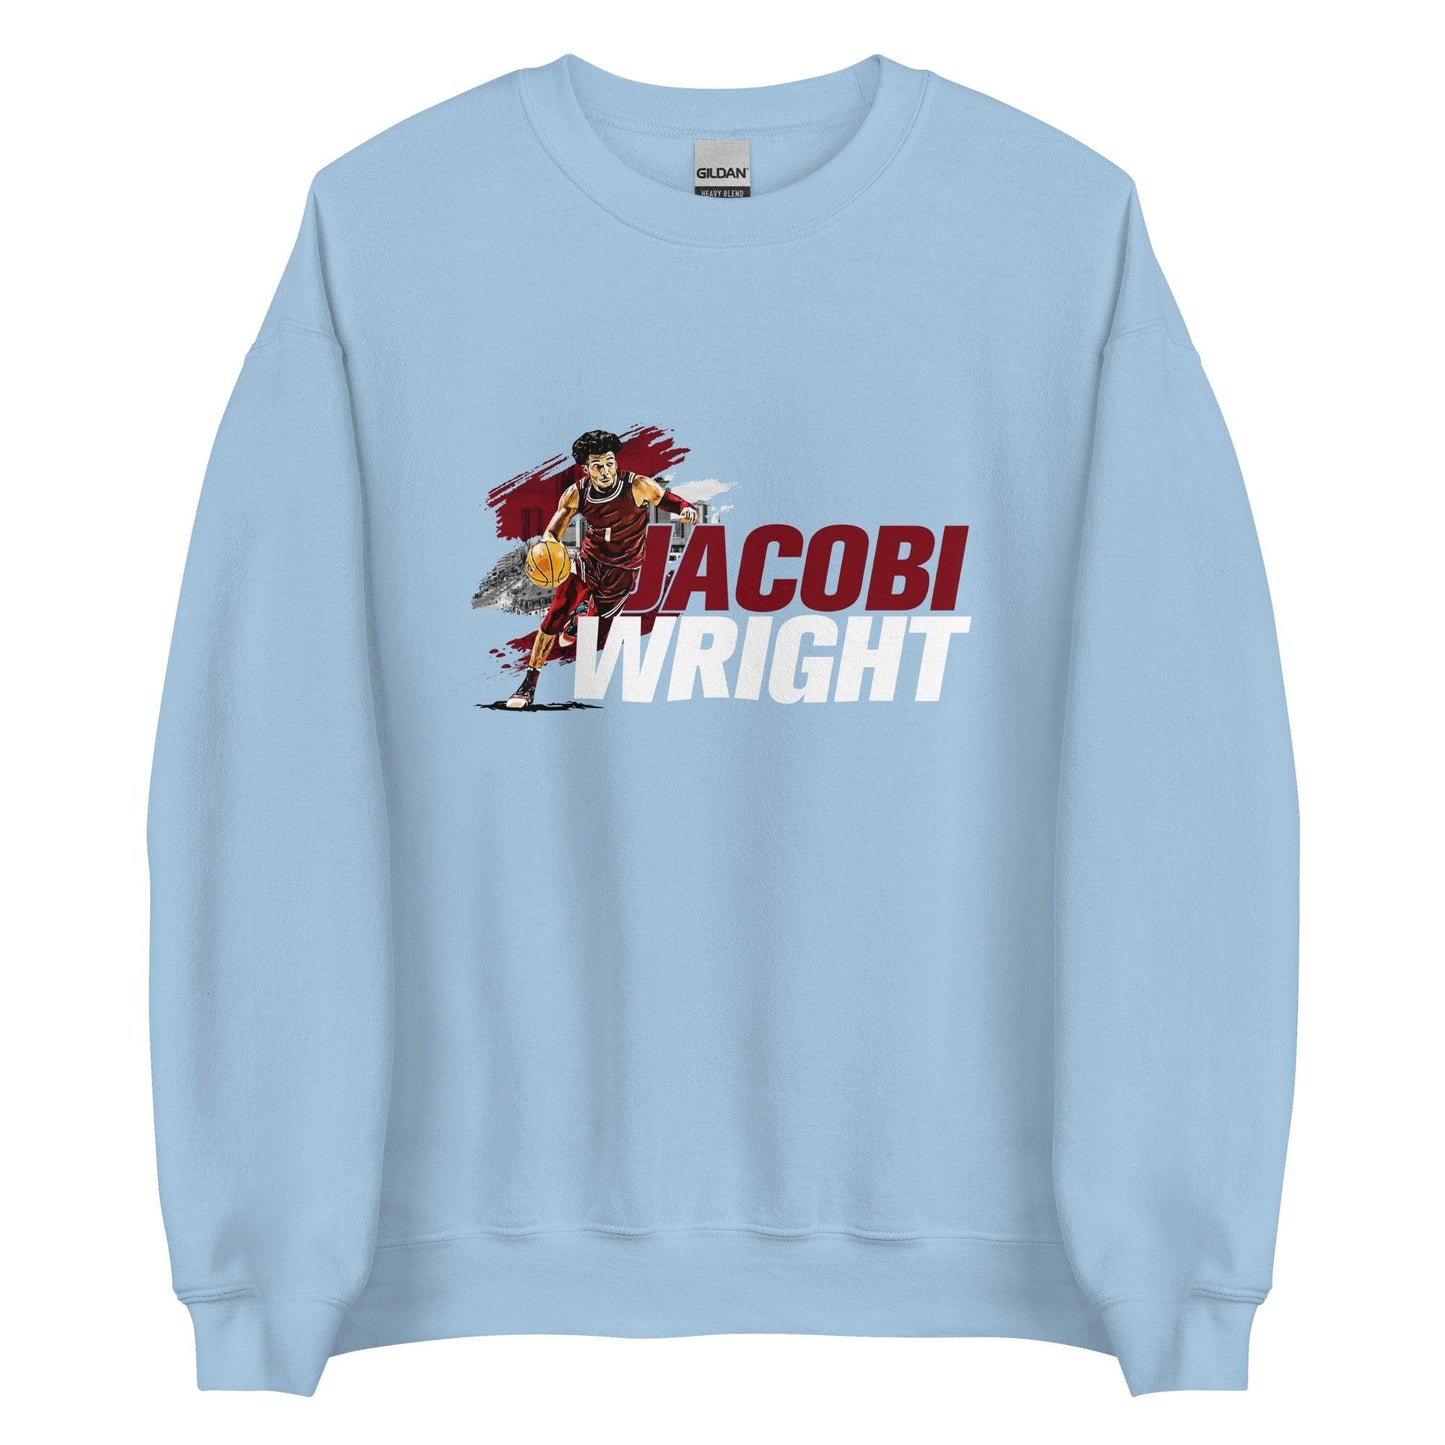 Jacobi Wright "Gameday" Sweatshirt - Fan Arch